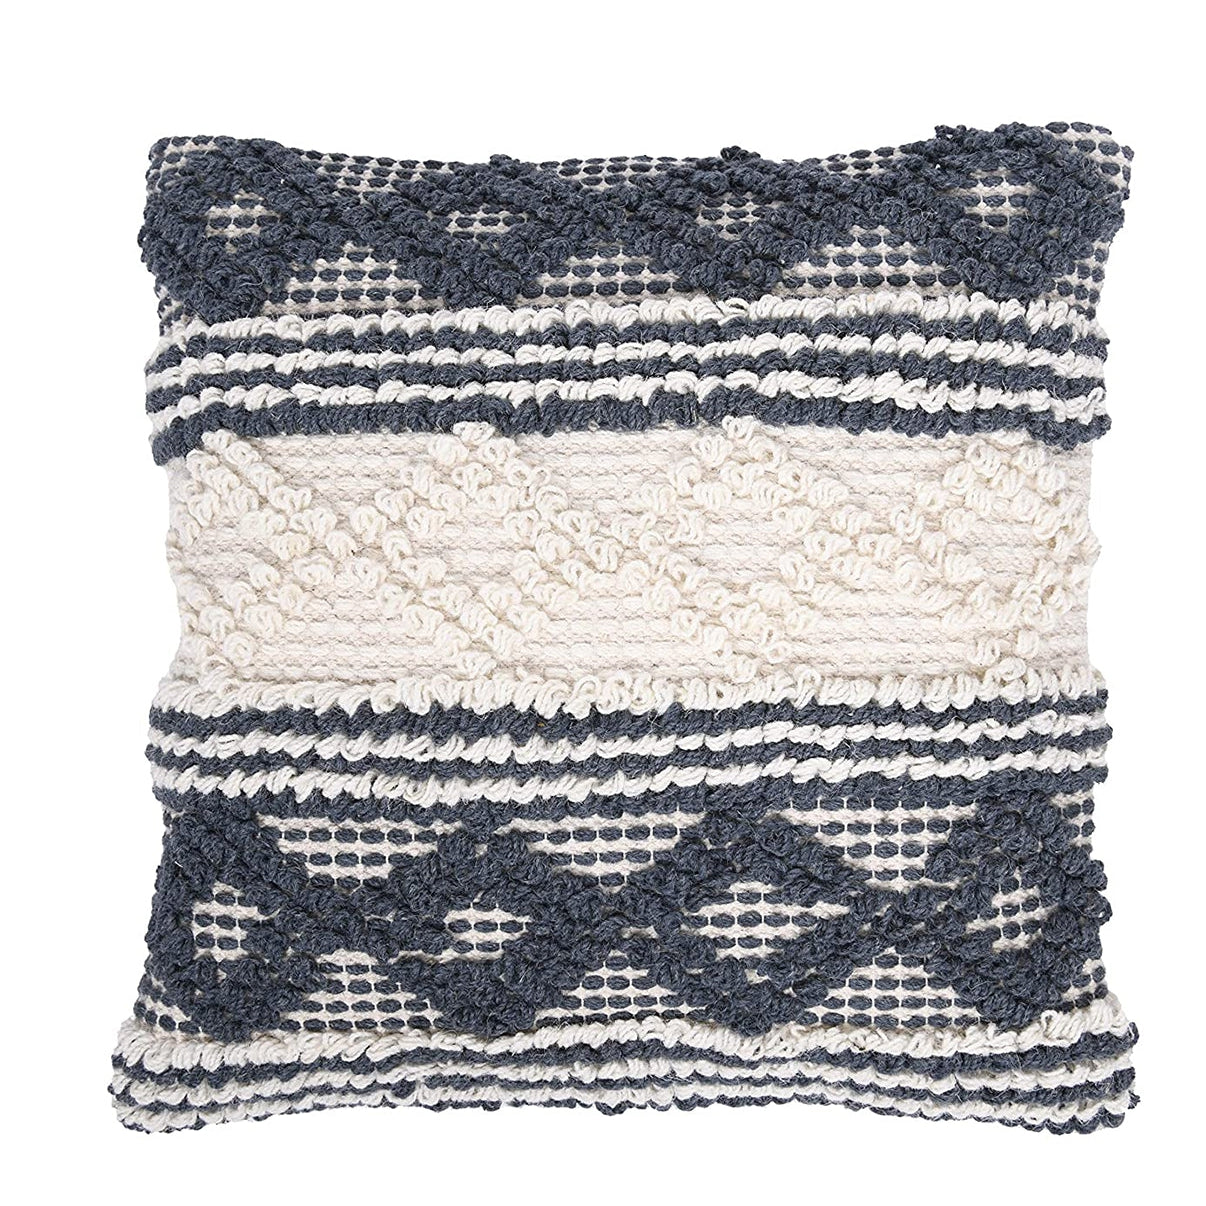 'Moroccan Magic' Hand-Woven Cotton Wool Cushion Cover